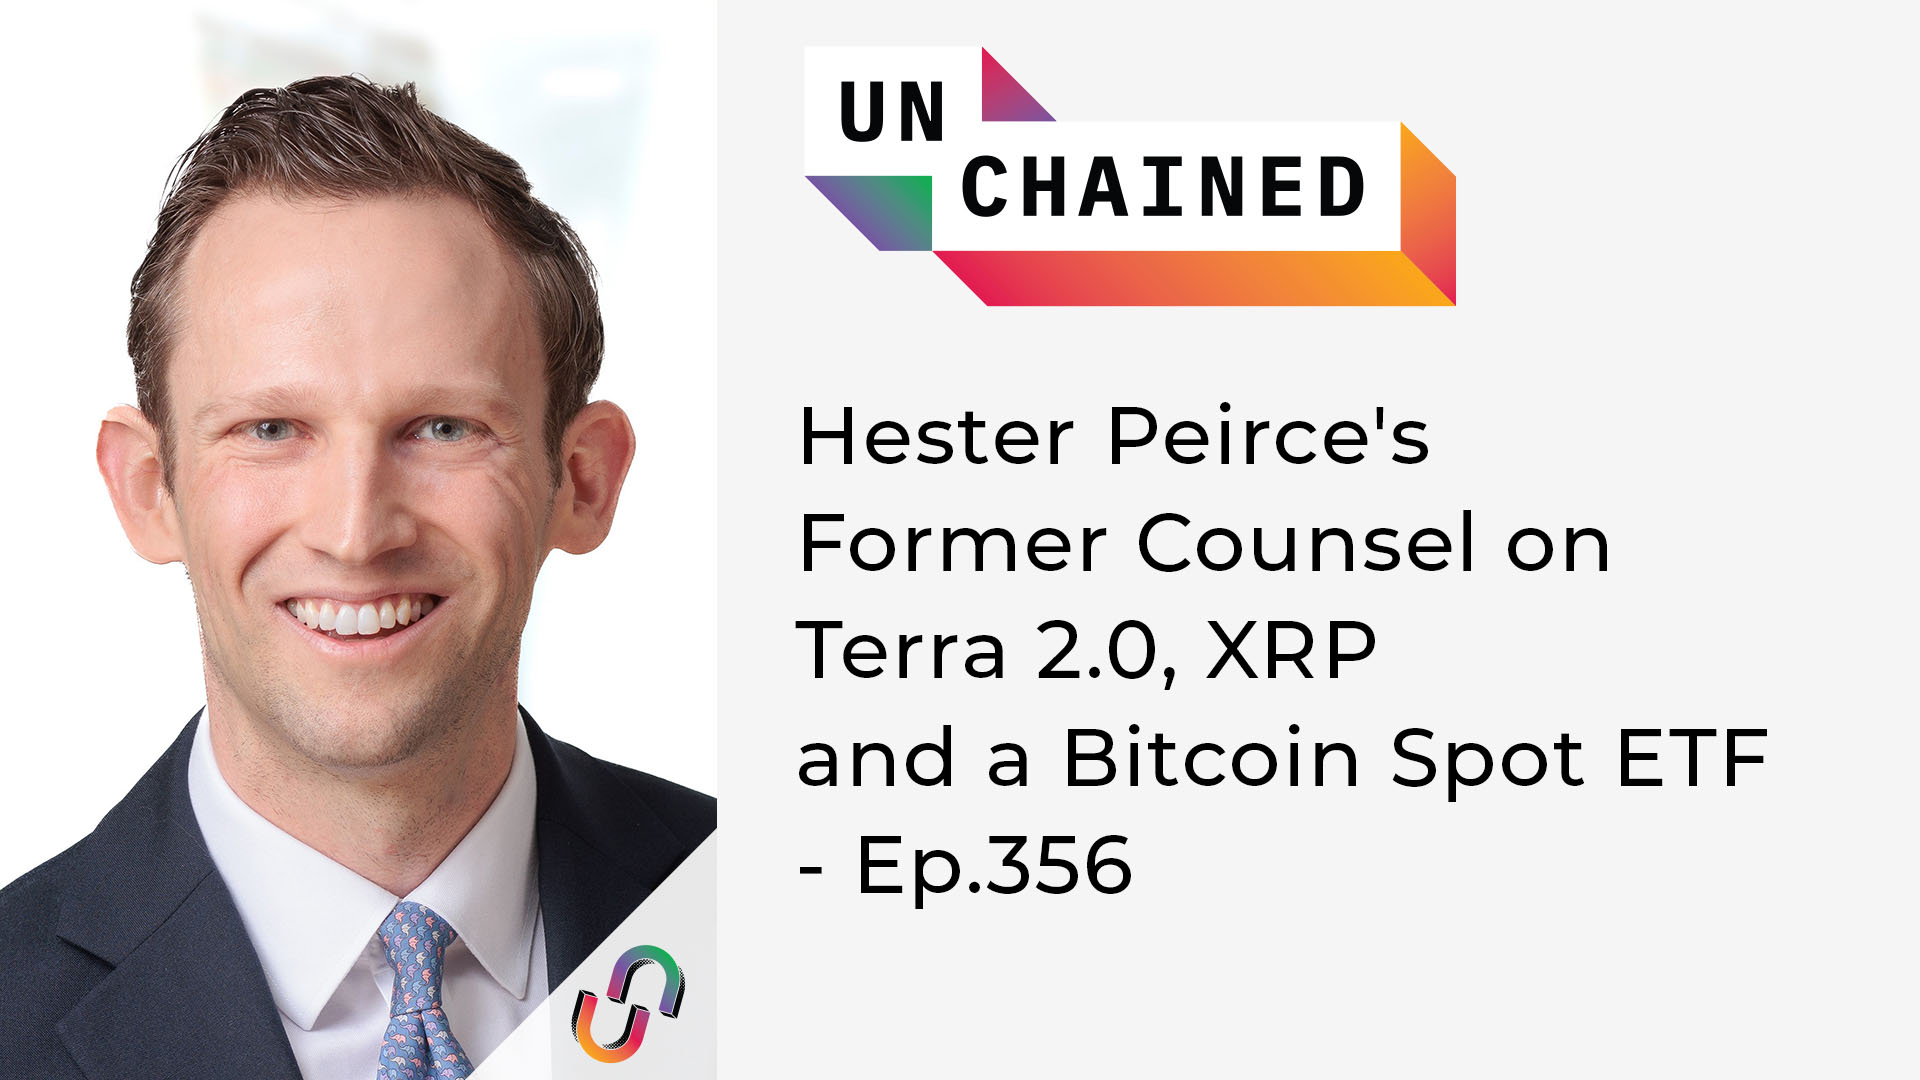 Unchained - Ep.356 - Колишній радник Гестер Пірс щодо Terra 2.0, XRP та Bitcoin Spot ETF